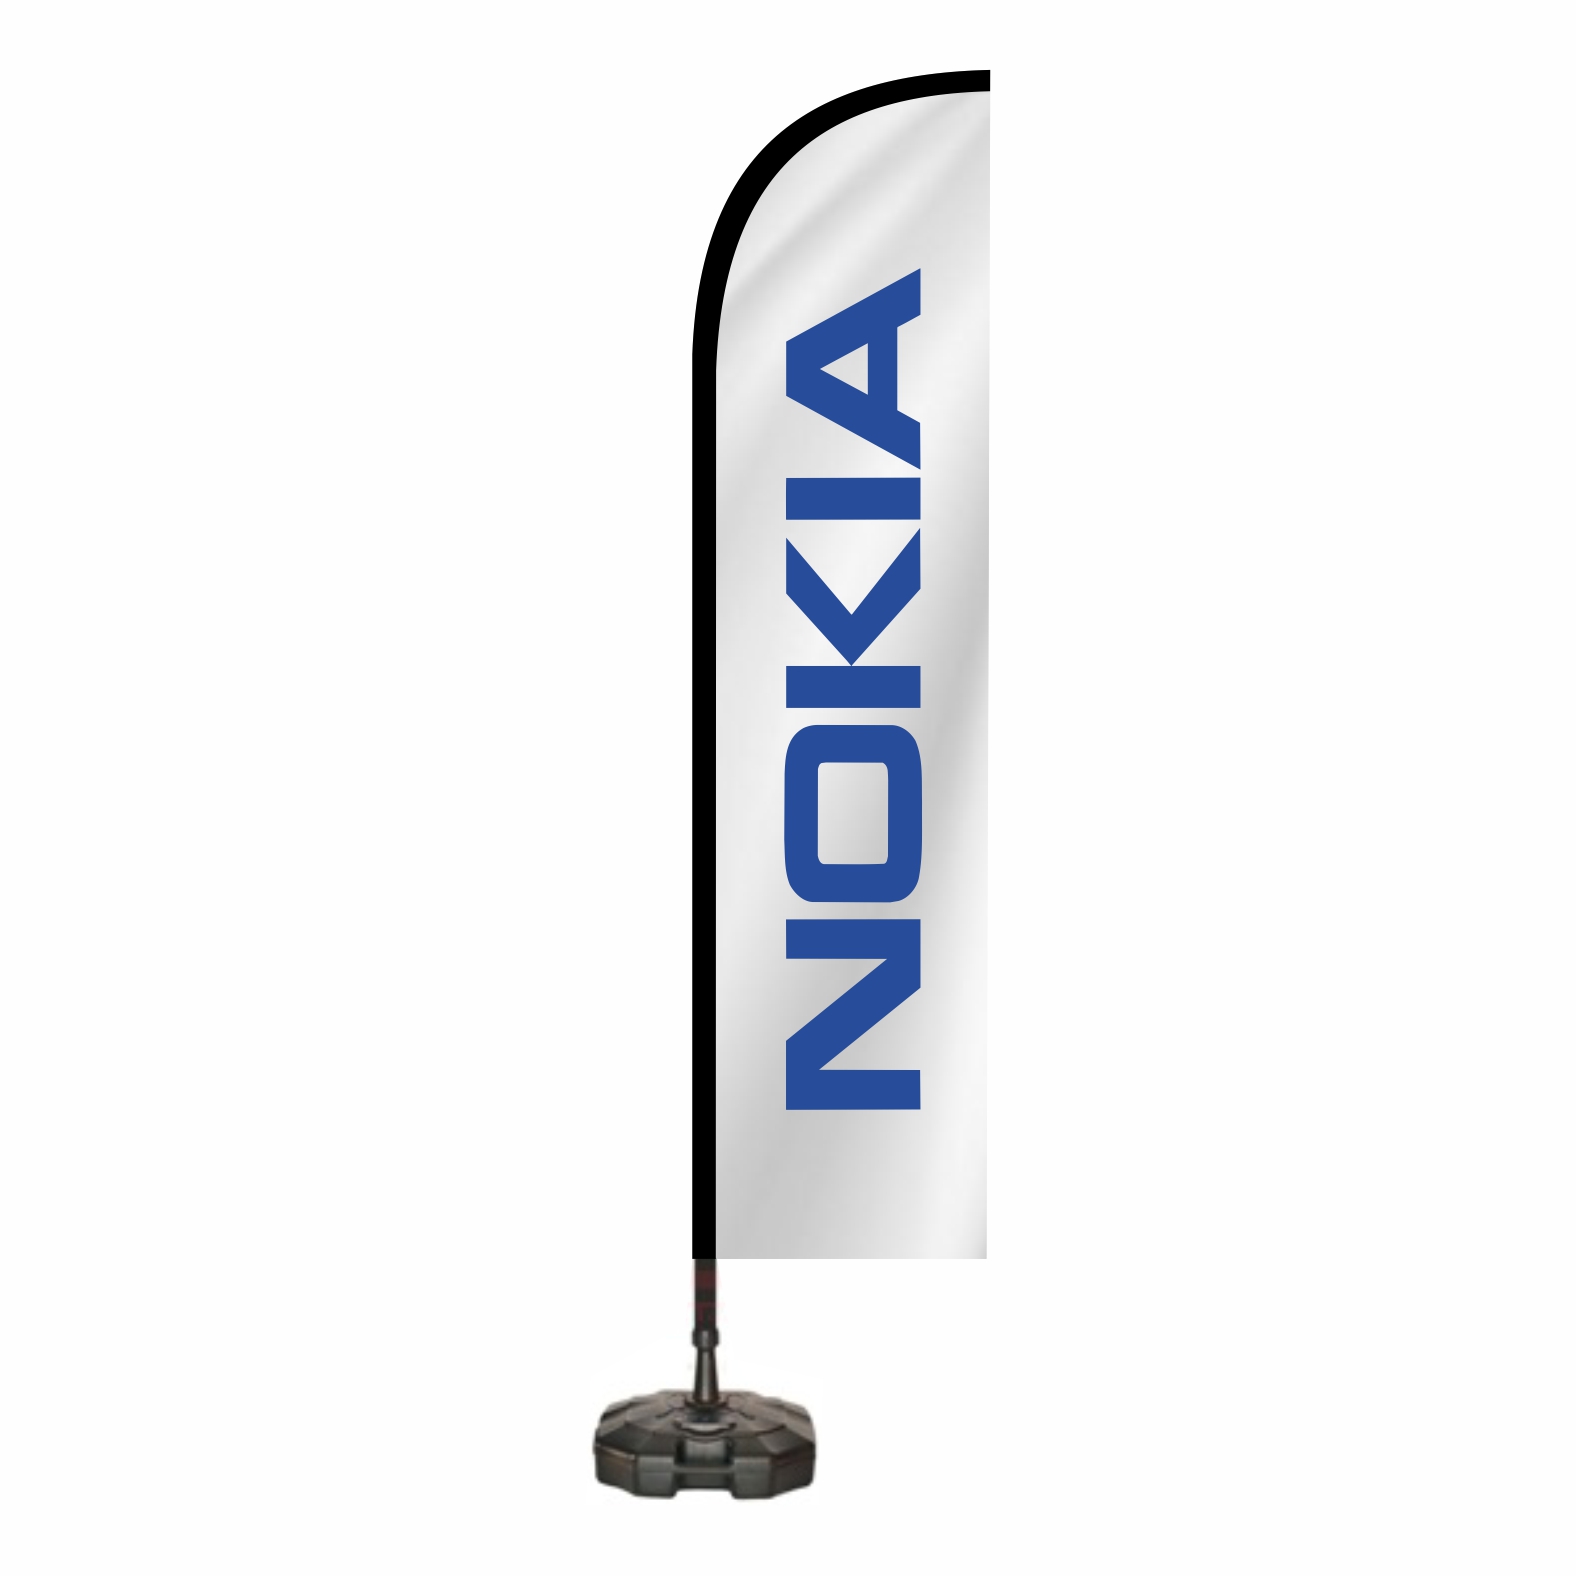 Nokia Yelken Bayraklar